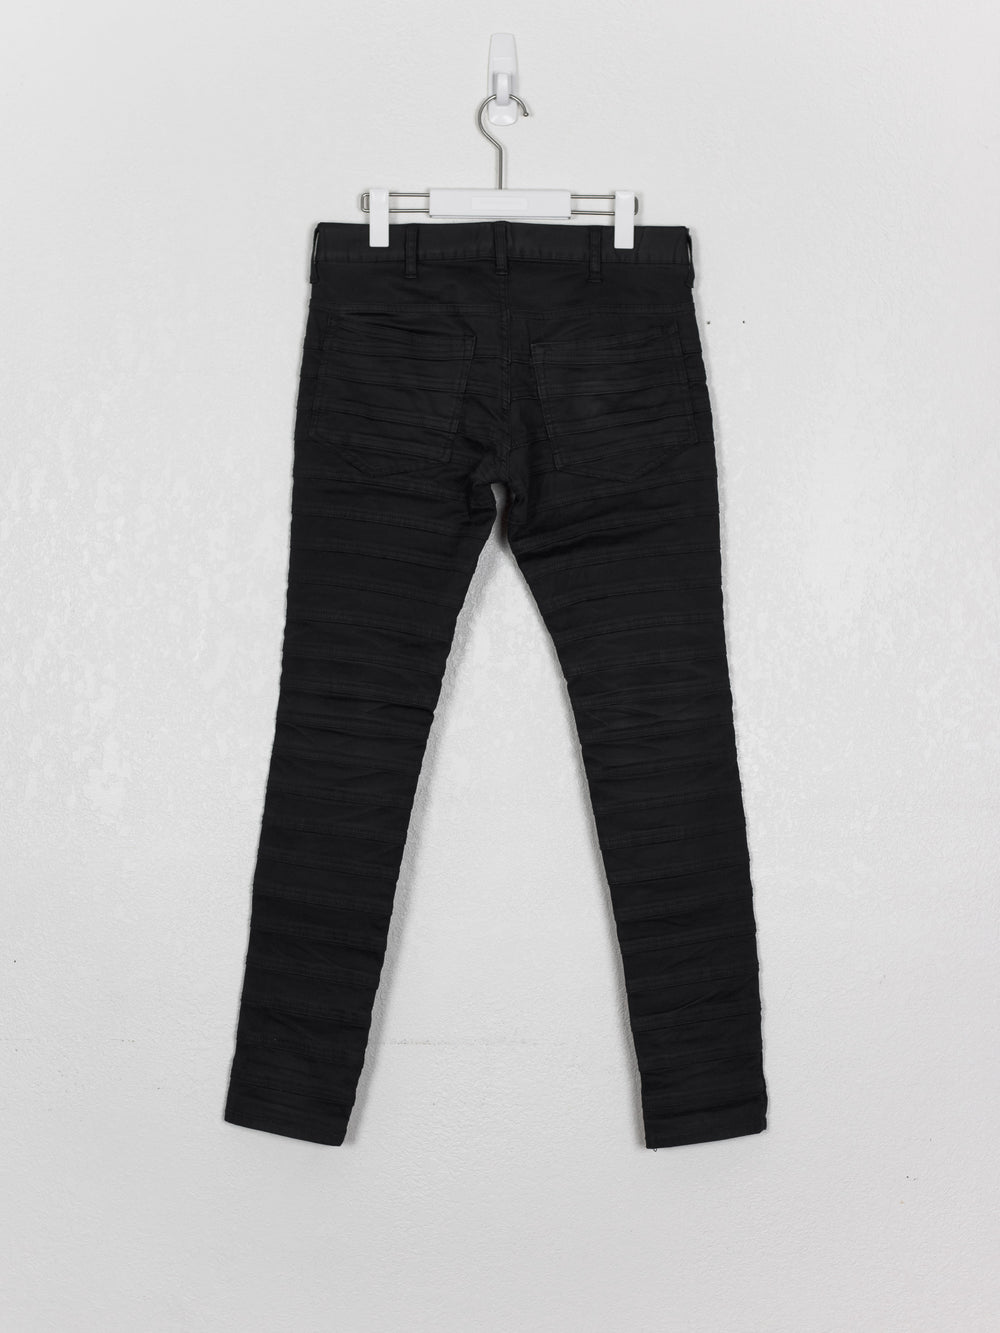 Undercover AW13 Ribbed Seam Hagi Jeans